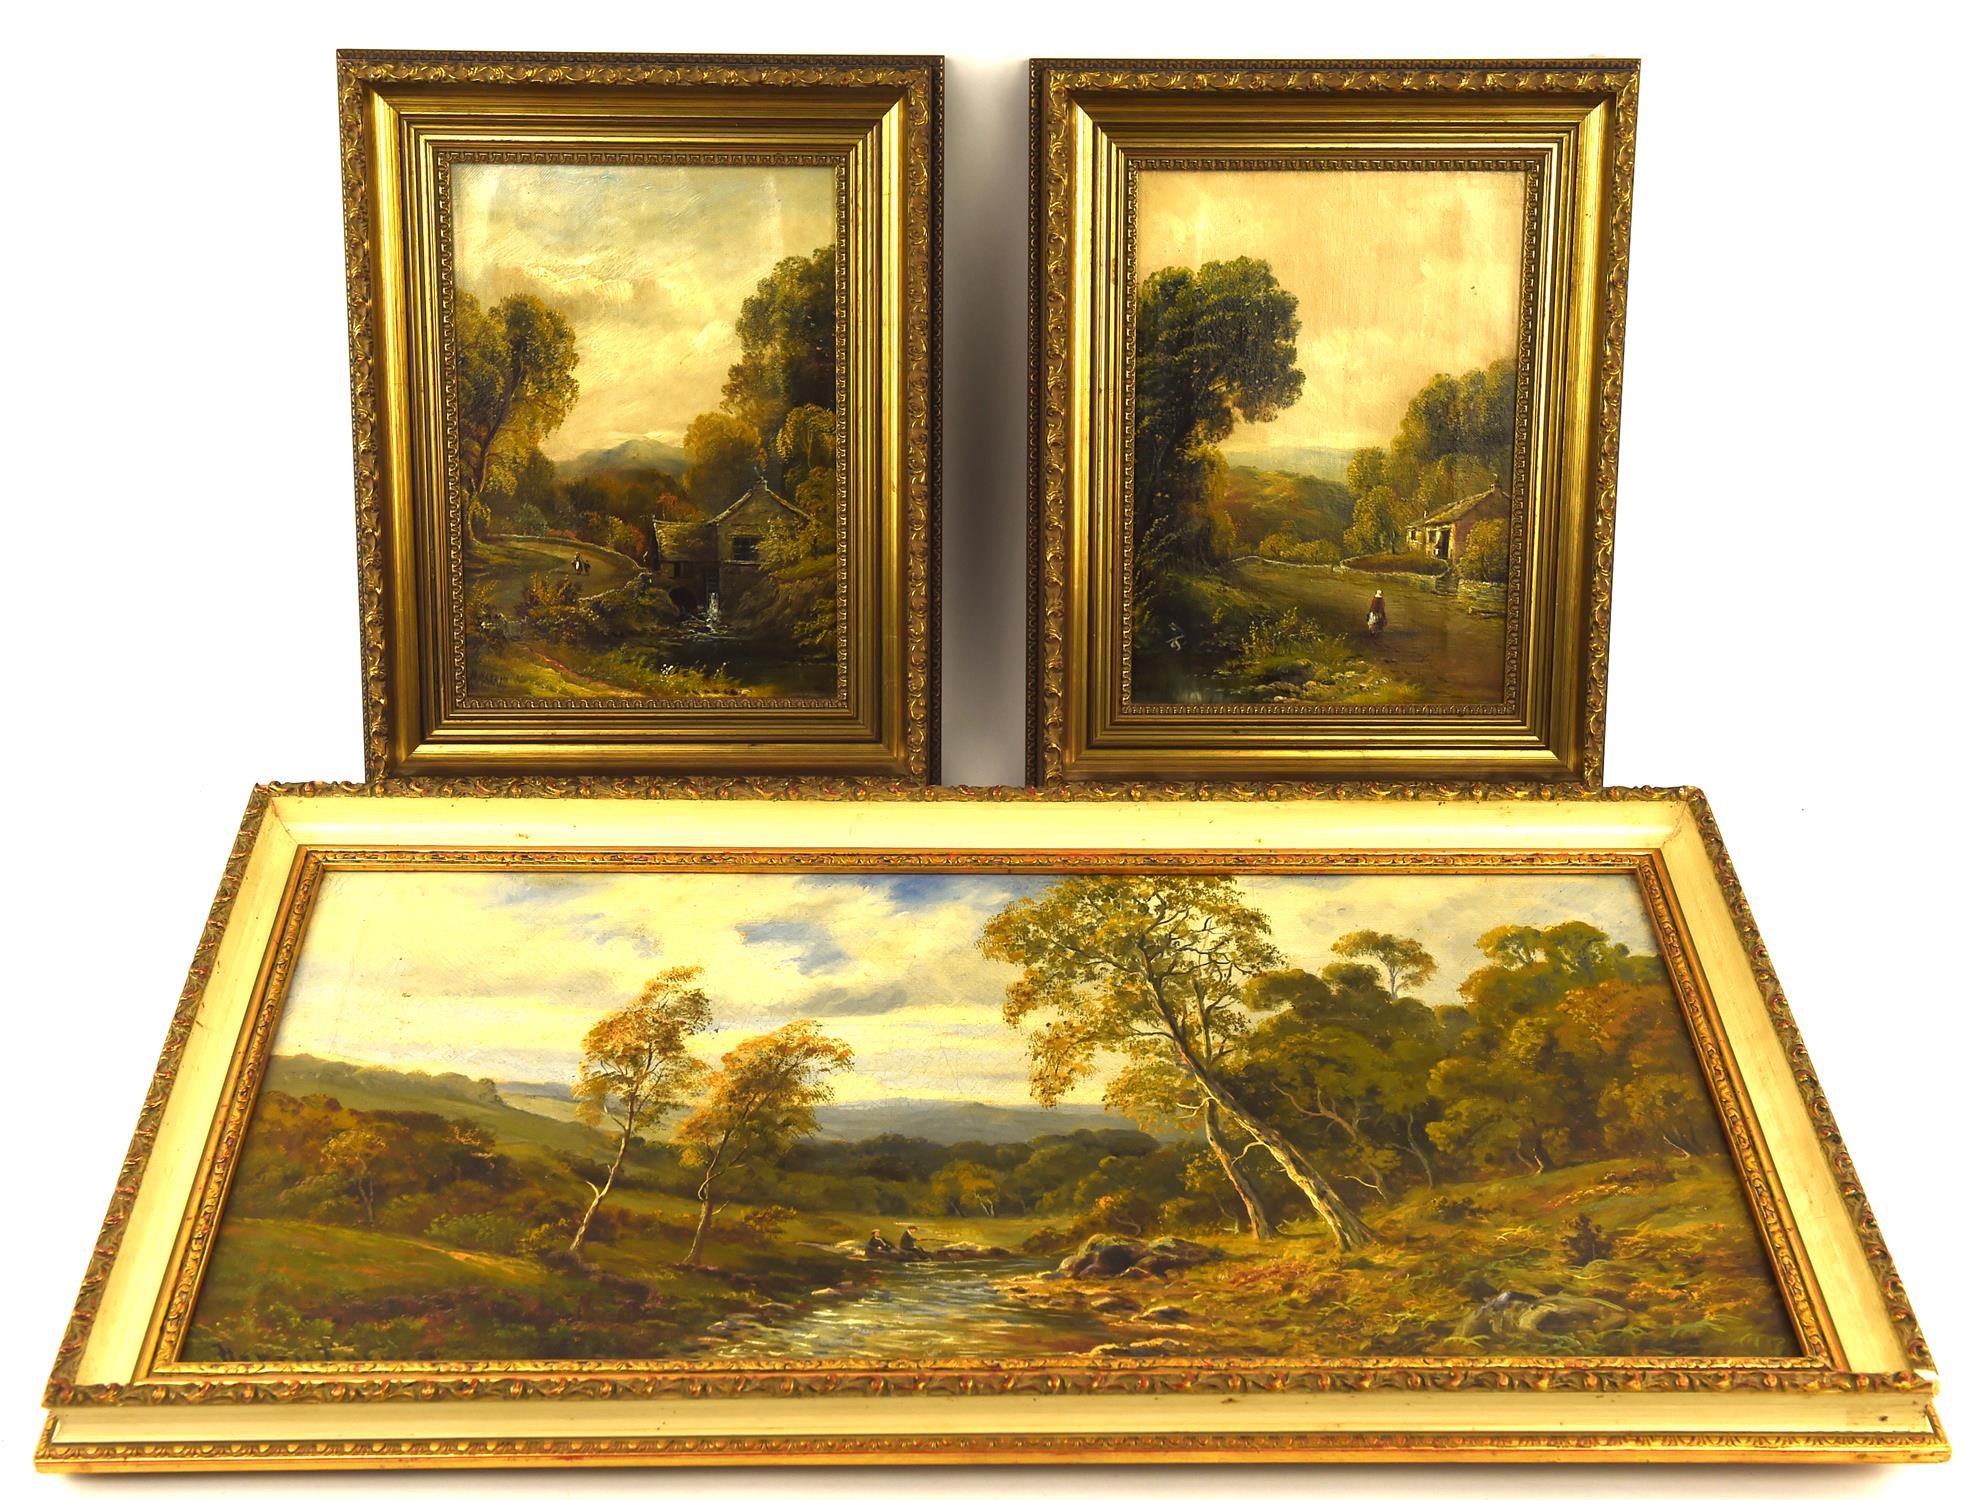 Henry Turner (19th century), Wooded river landscape, oil on canvas, signed lower left, 29 x 60cm.